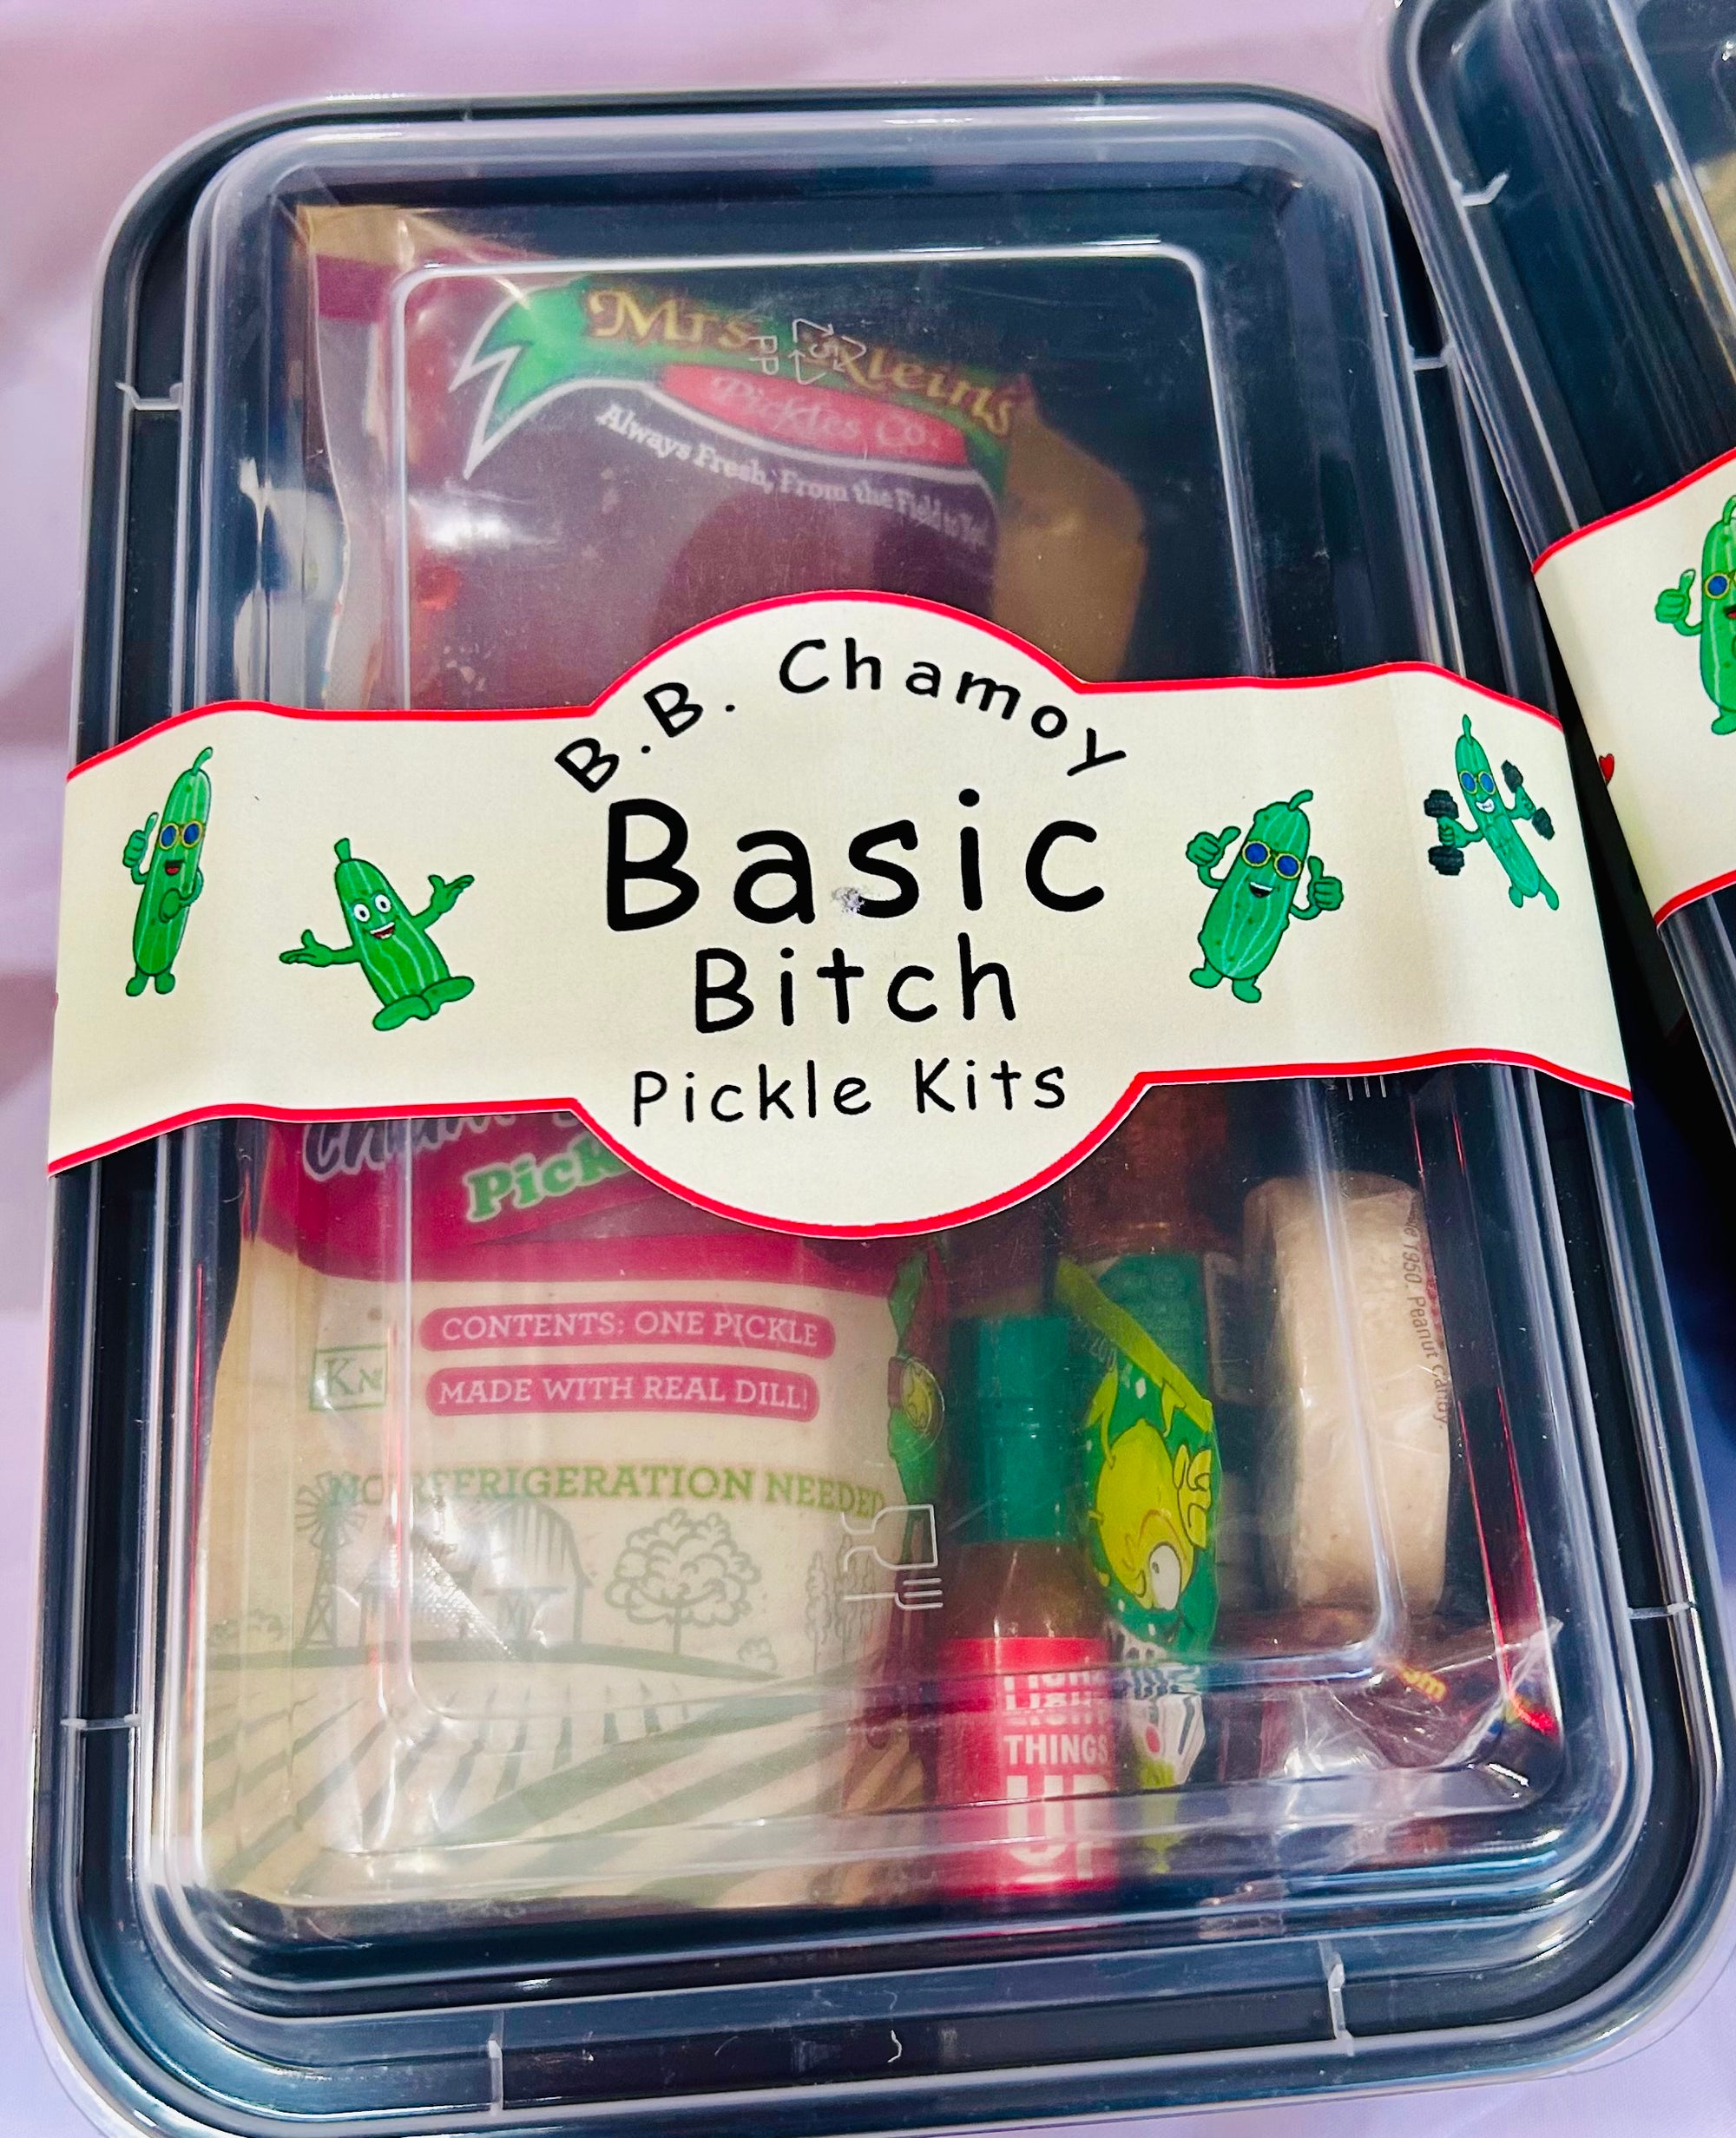 Chamoy Pickle kits